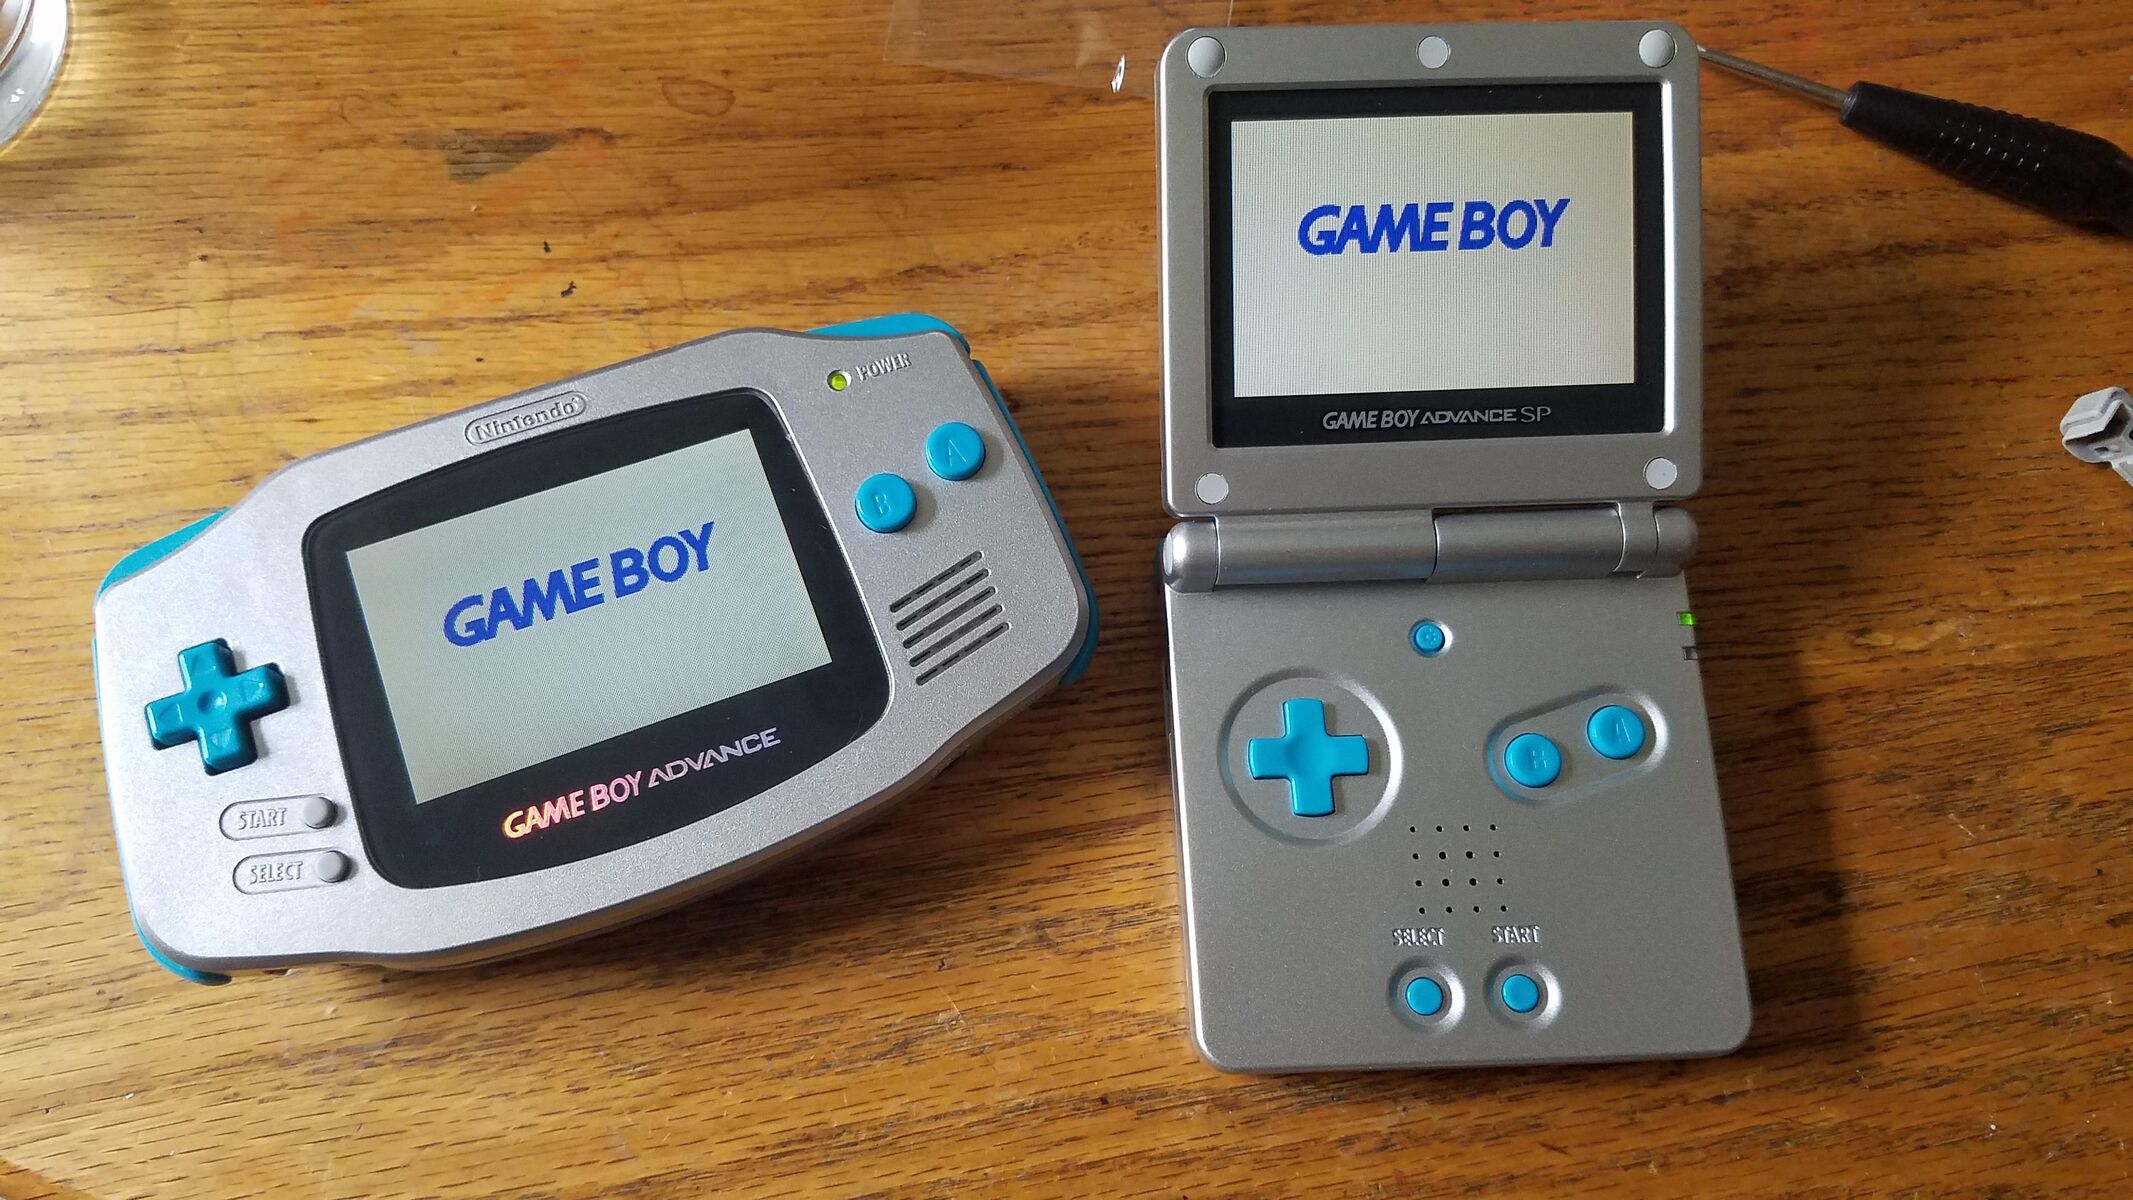 Nintendo Game Boy Video Game Consoles for Sale - Carabhan.